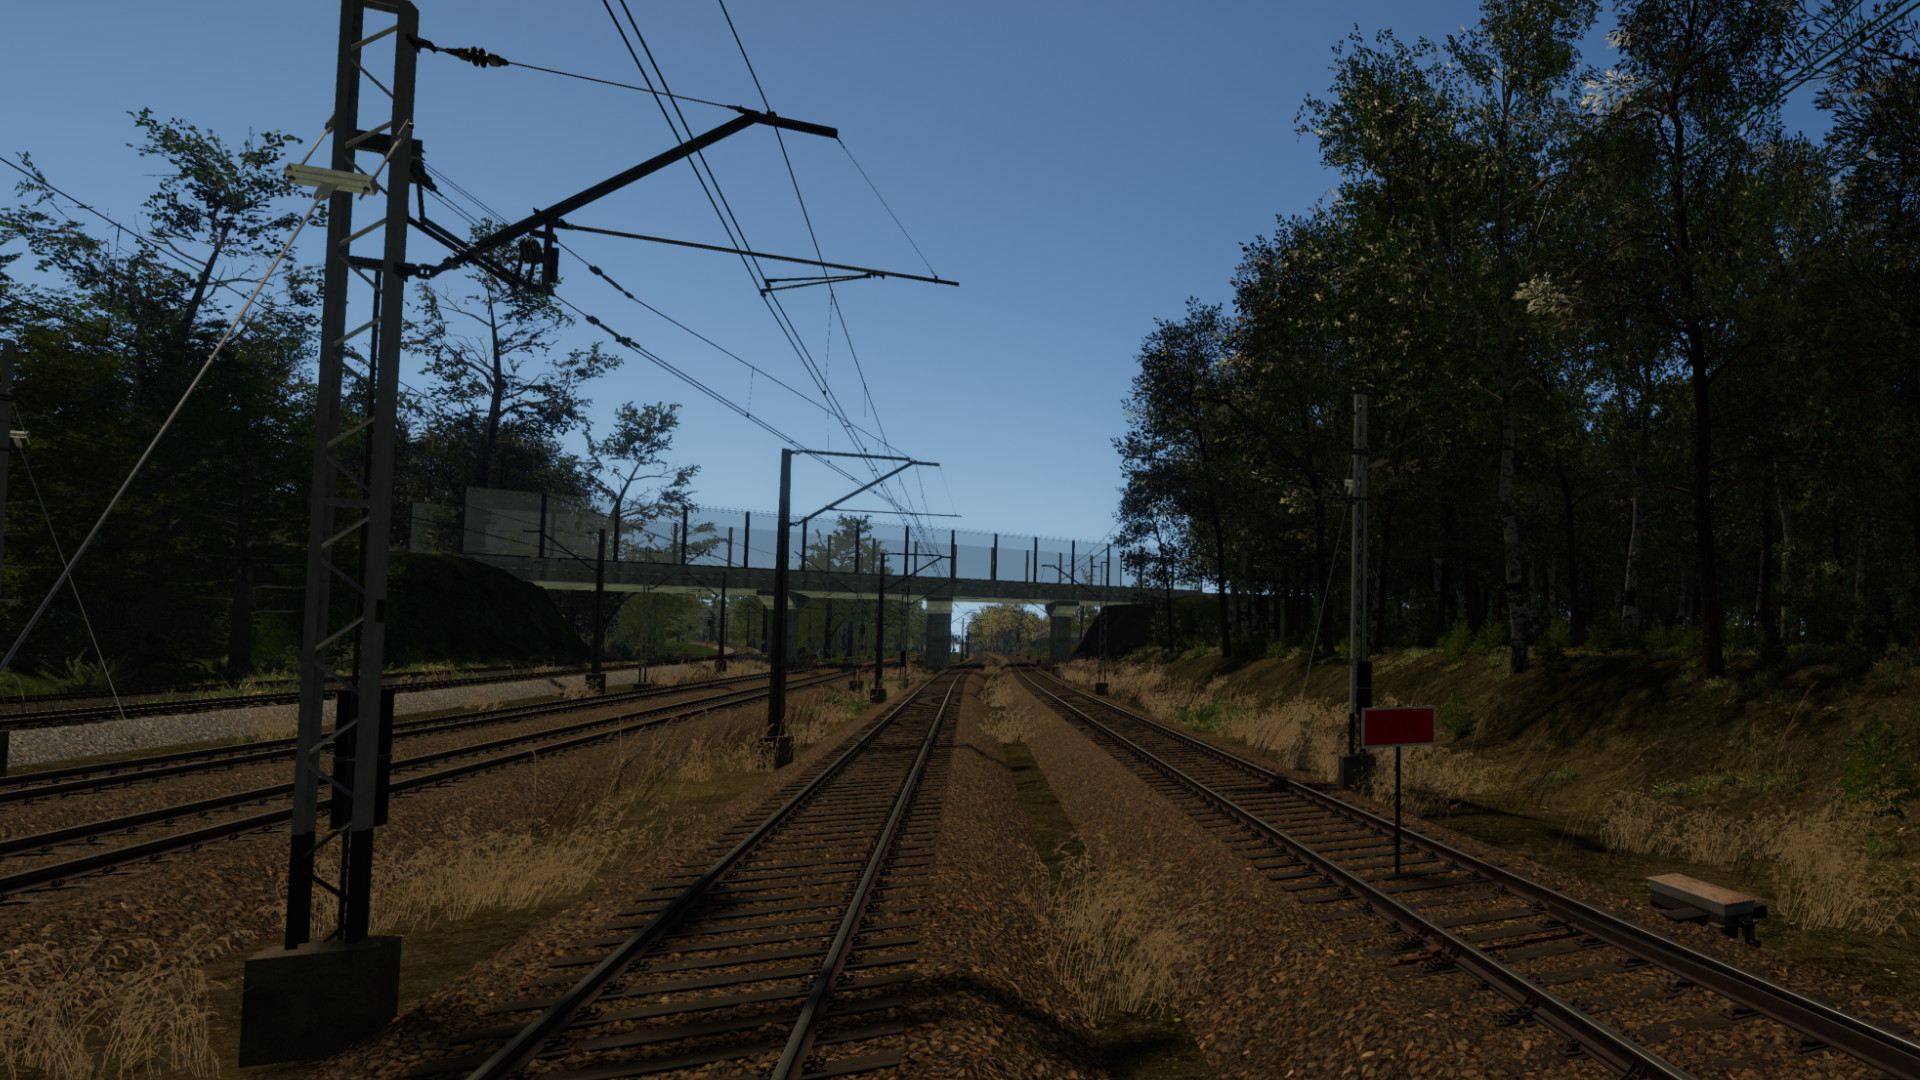 SimRail - The Railway Simulator - screenshot 9